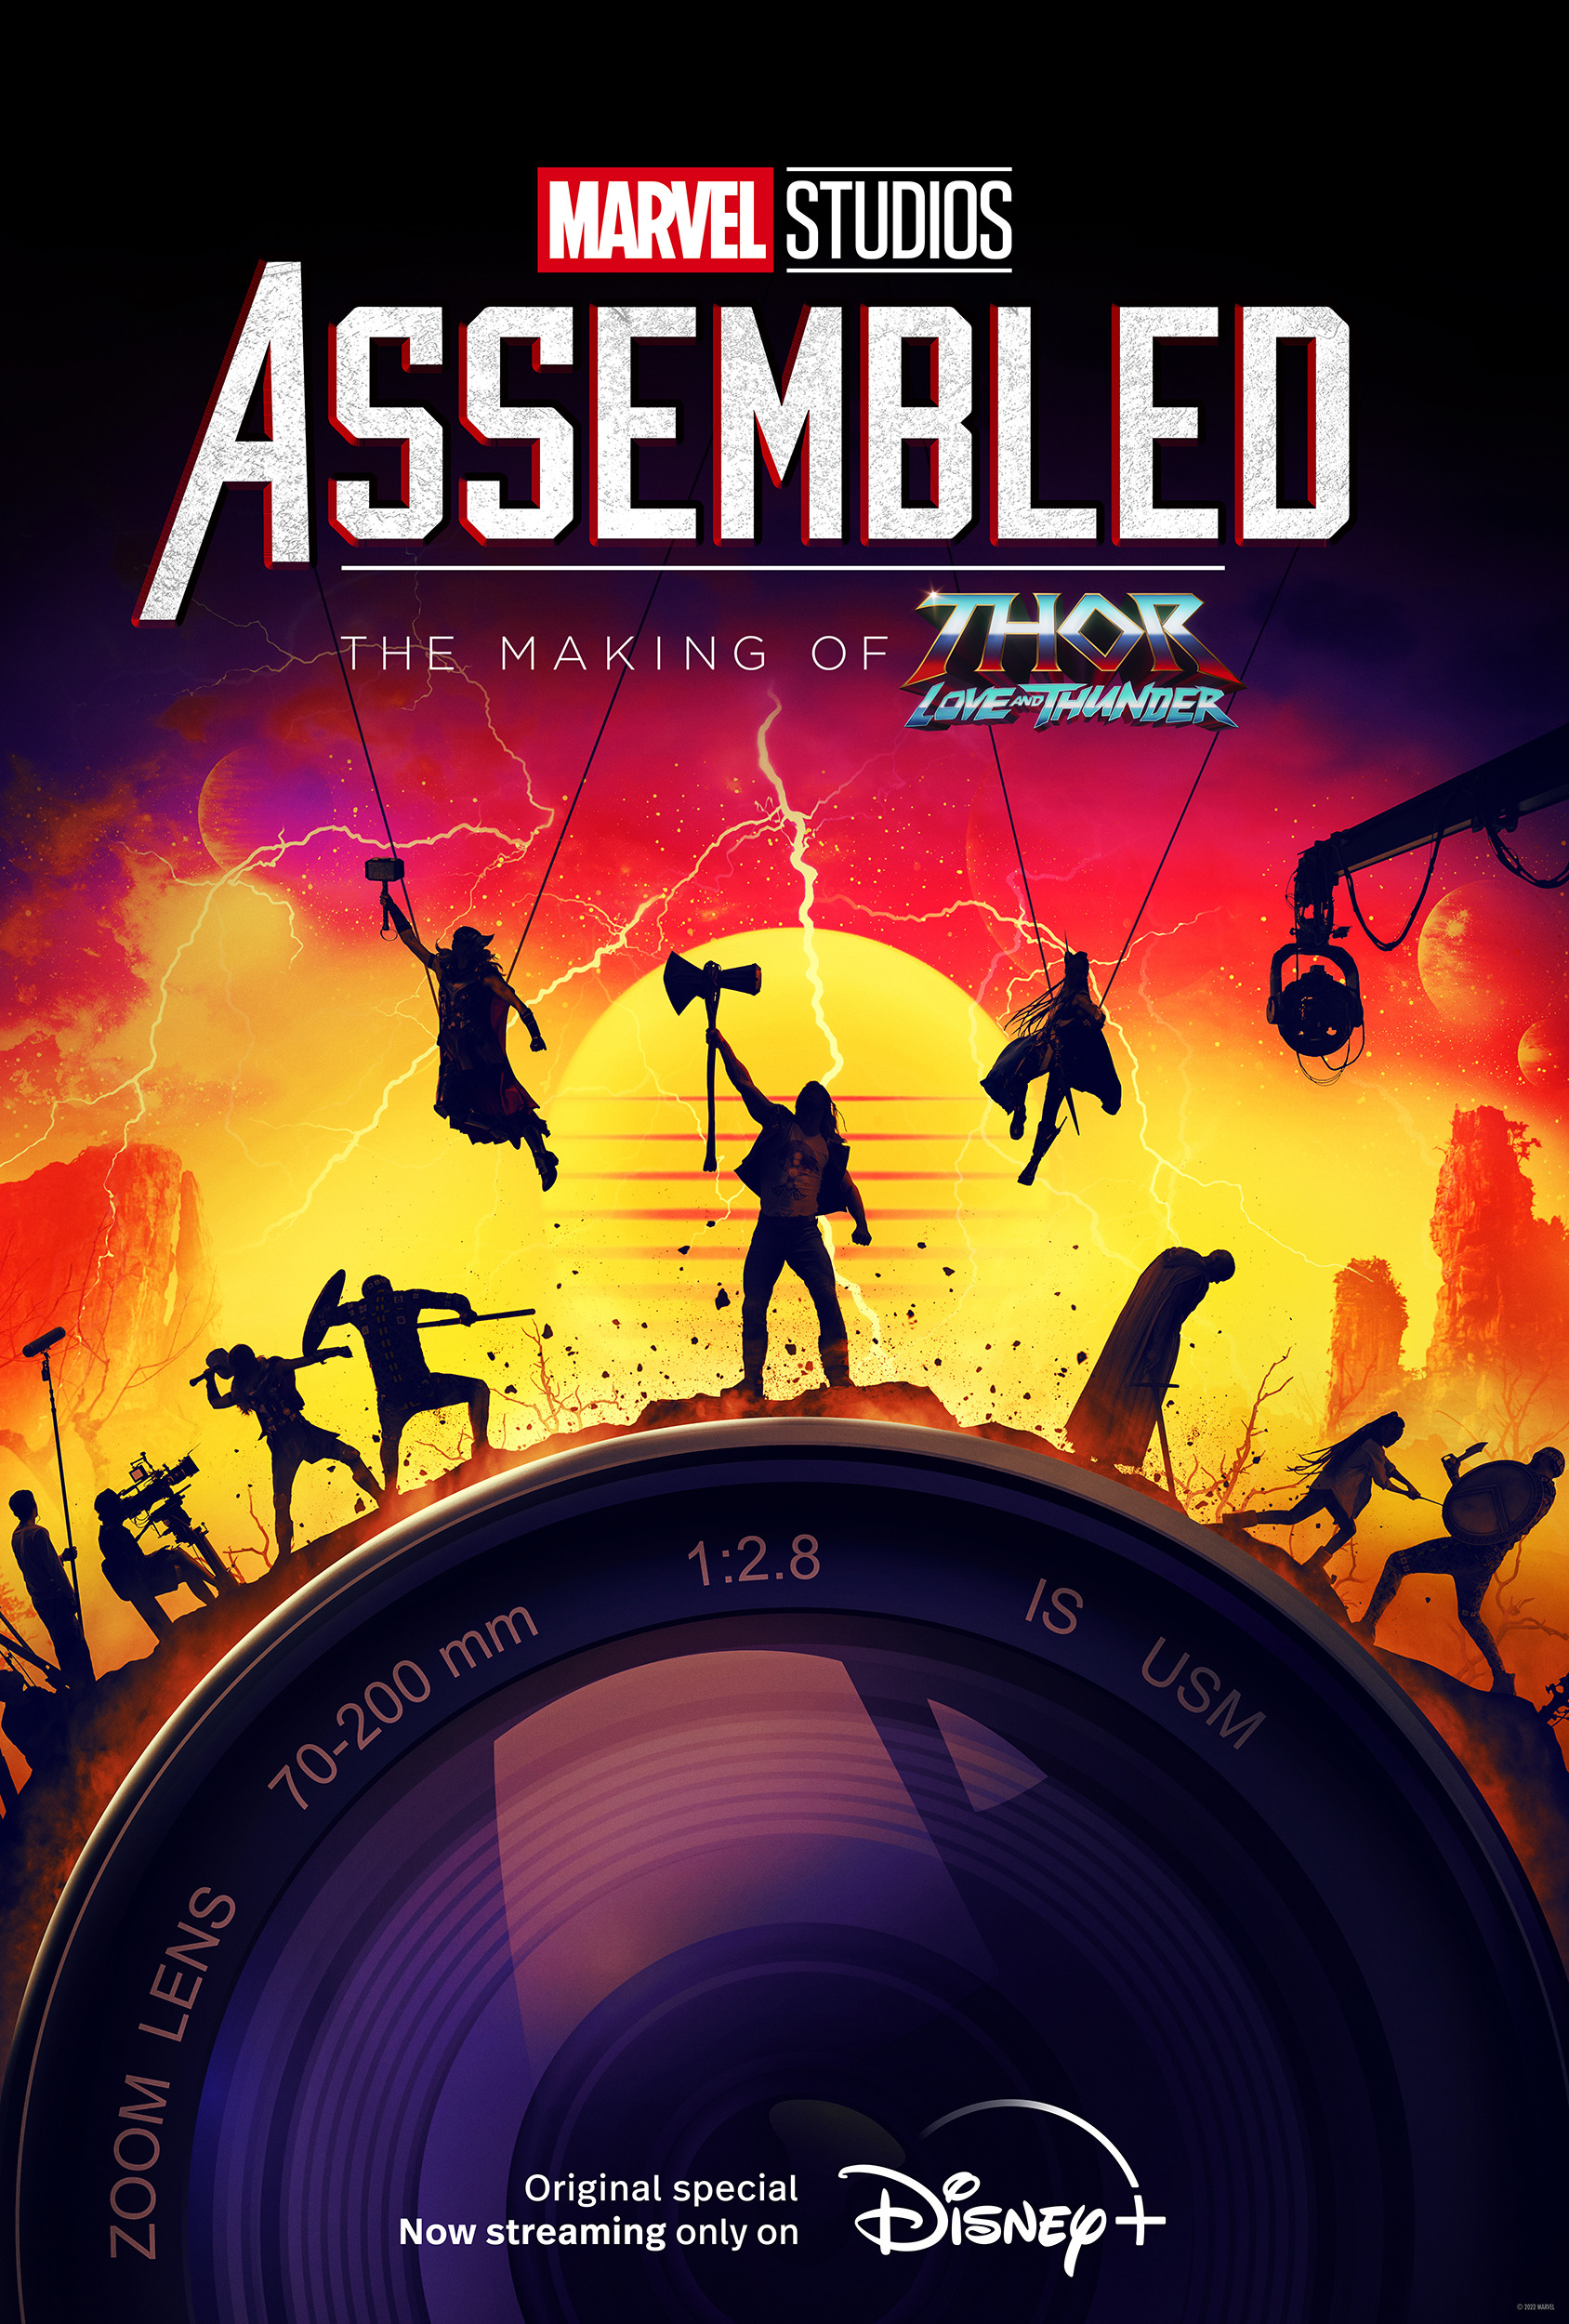 Mega Sized TV Poster Image for Marvel Studios: Assembled (#12 of 20)